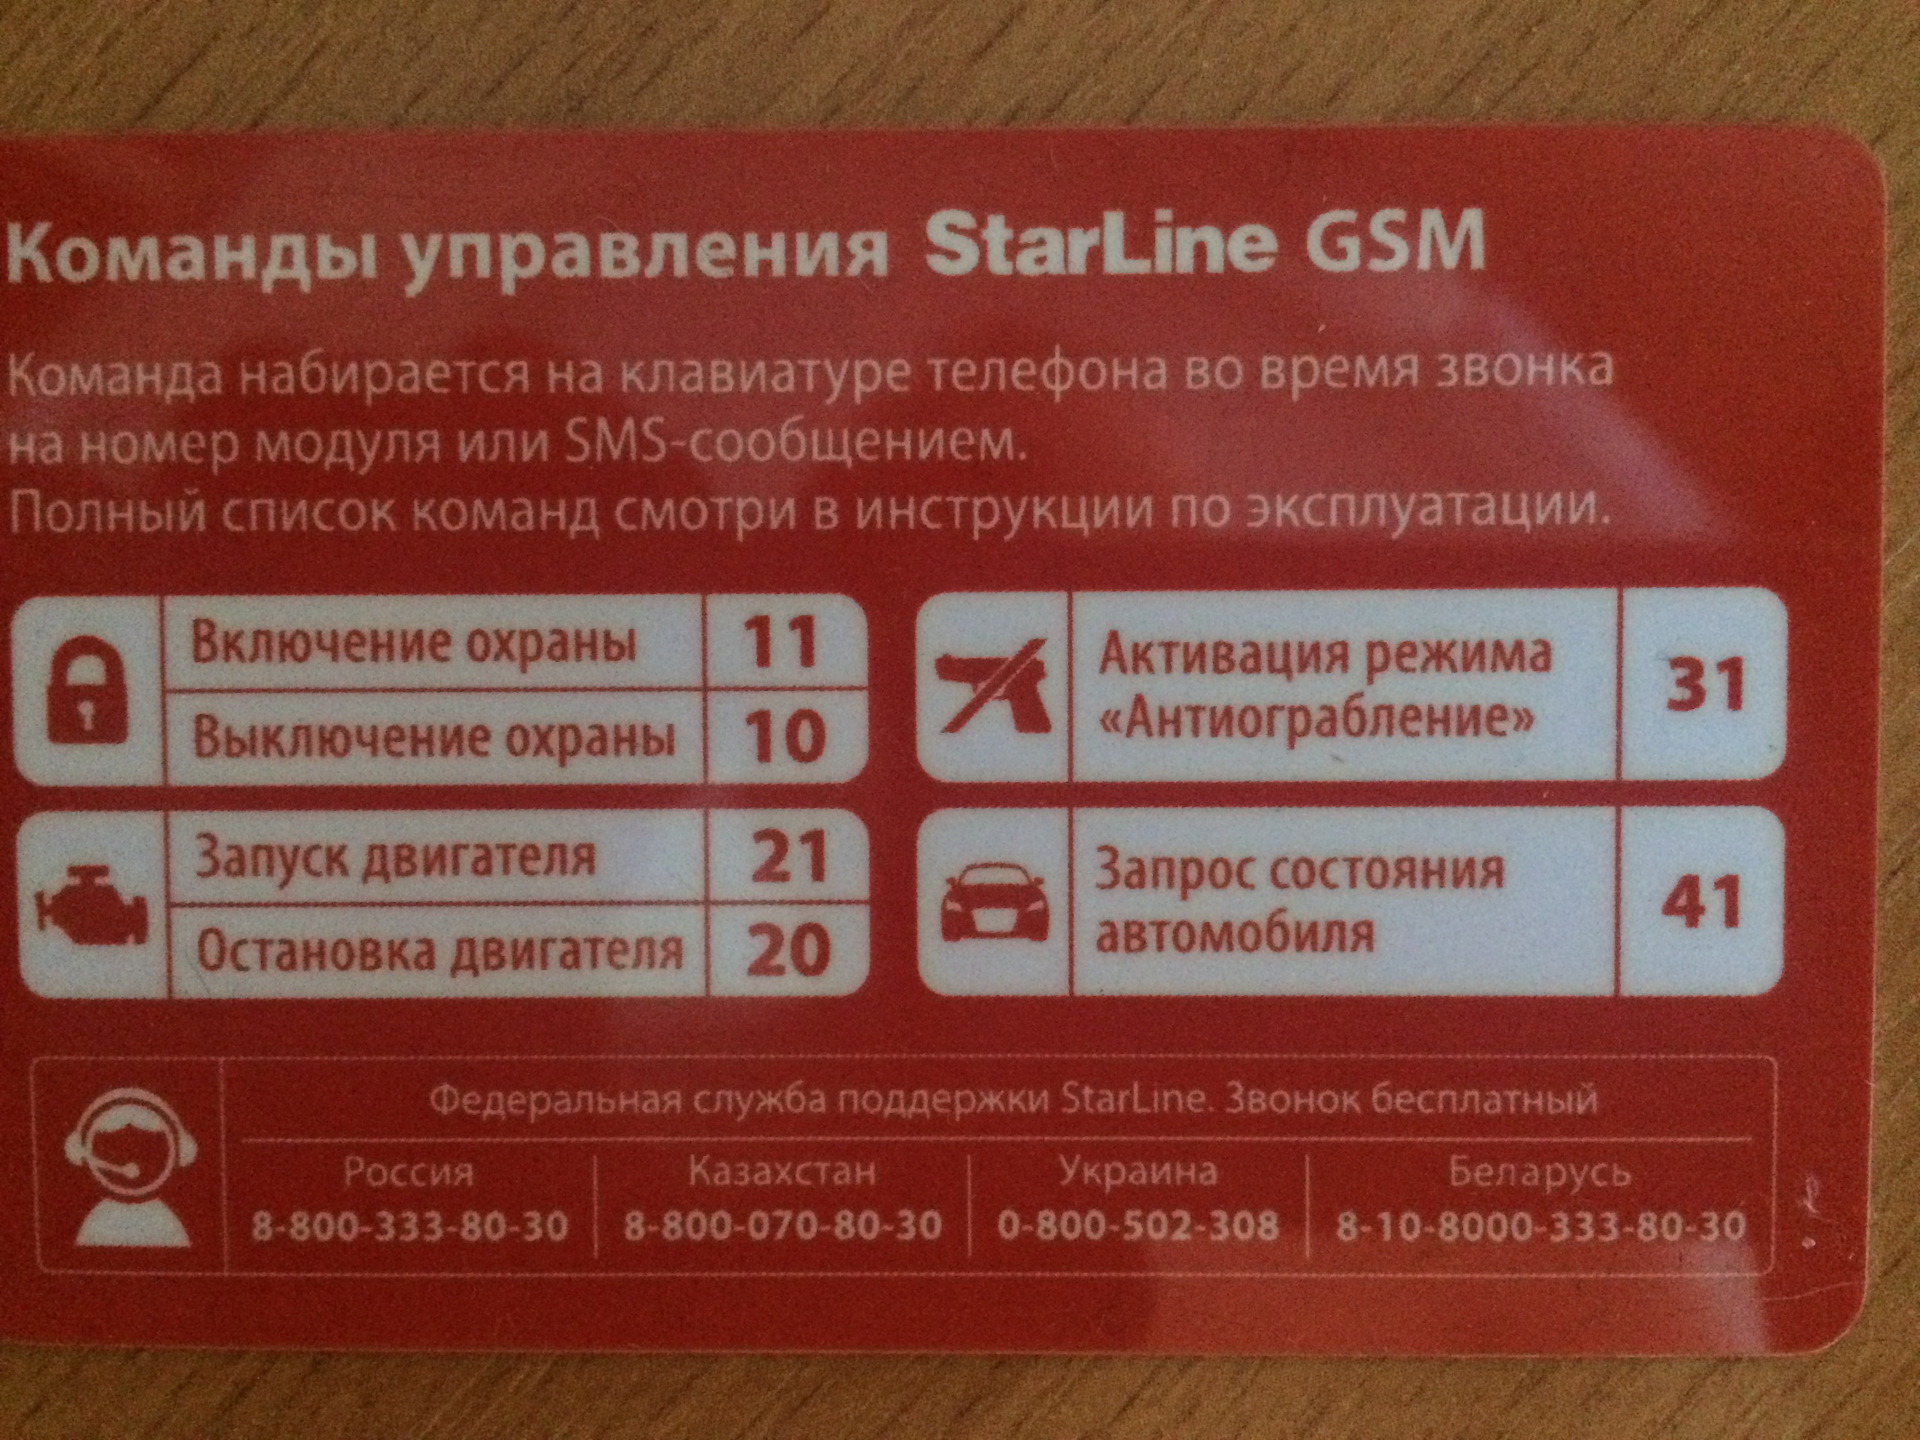 Смс команды старлайн s96. Команды управления STARLINE GSM. Коды команд старлайн GSM а93. Коды сигнализации STARLINE GSM. SMS команды STARLINE s96.